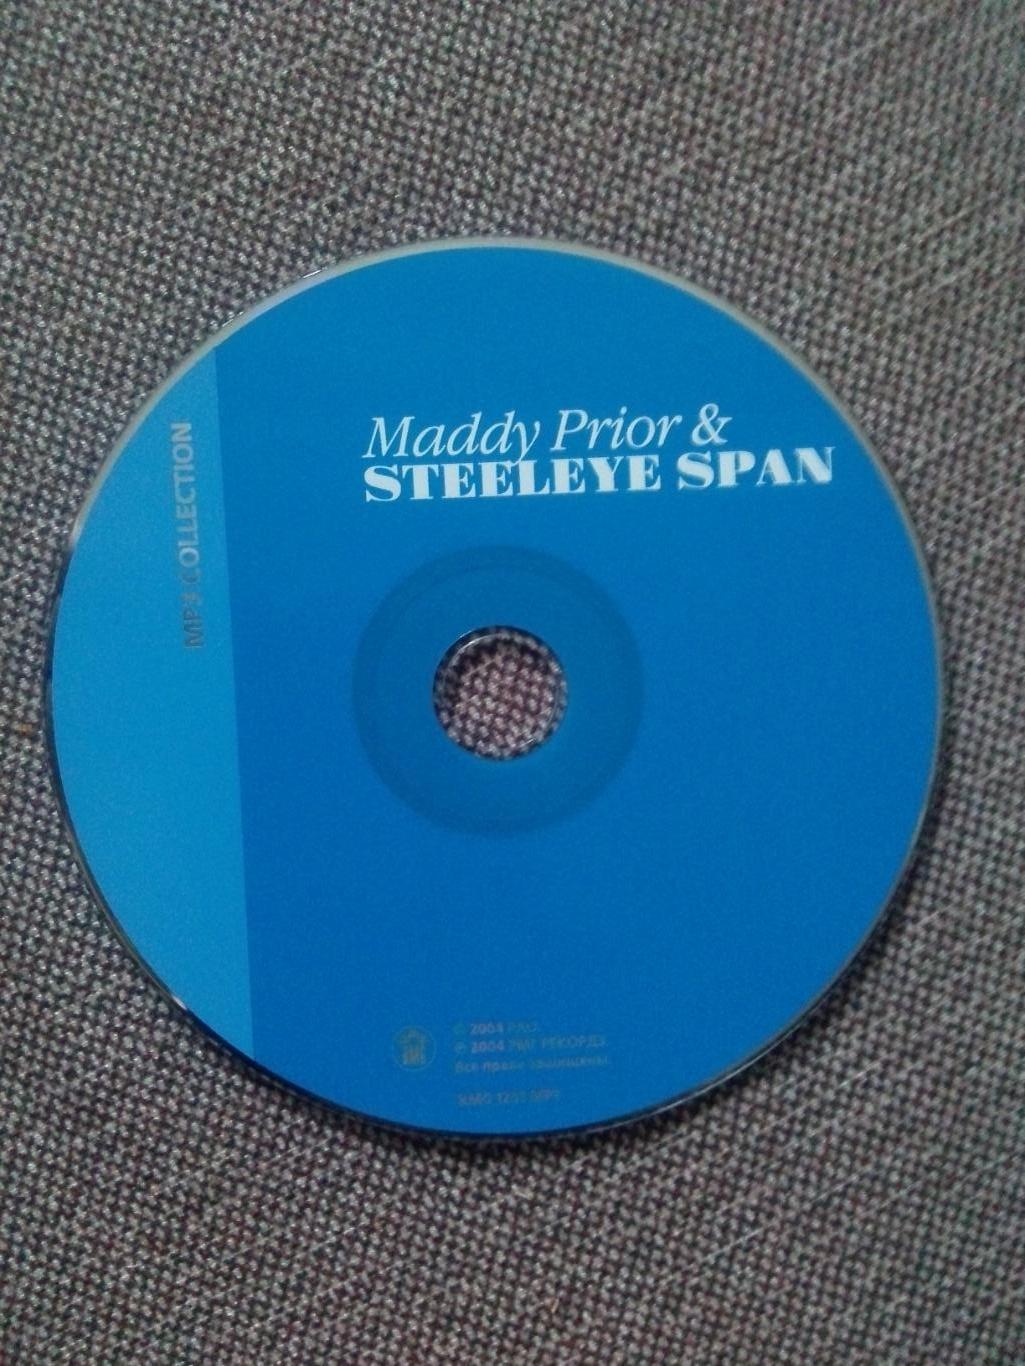 MP - 3 CD диск : Maddy Prior & Steeleye Span 1971 - 1994 гг. 11 альбомов Рок 5